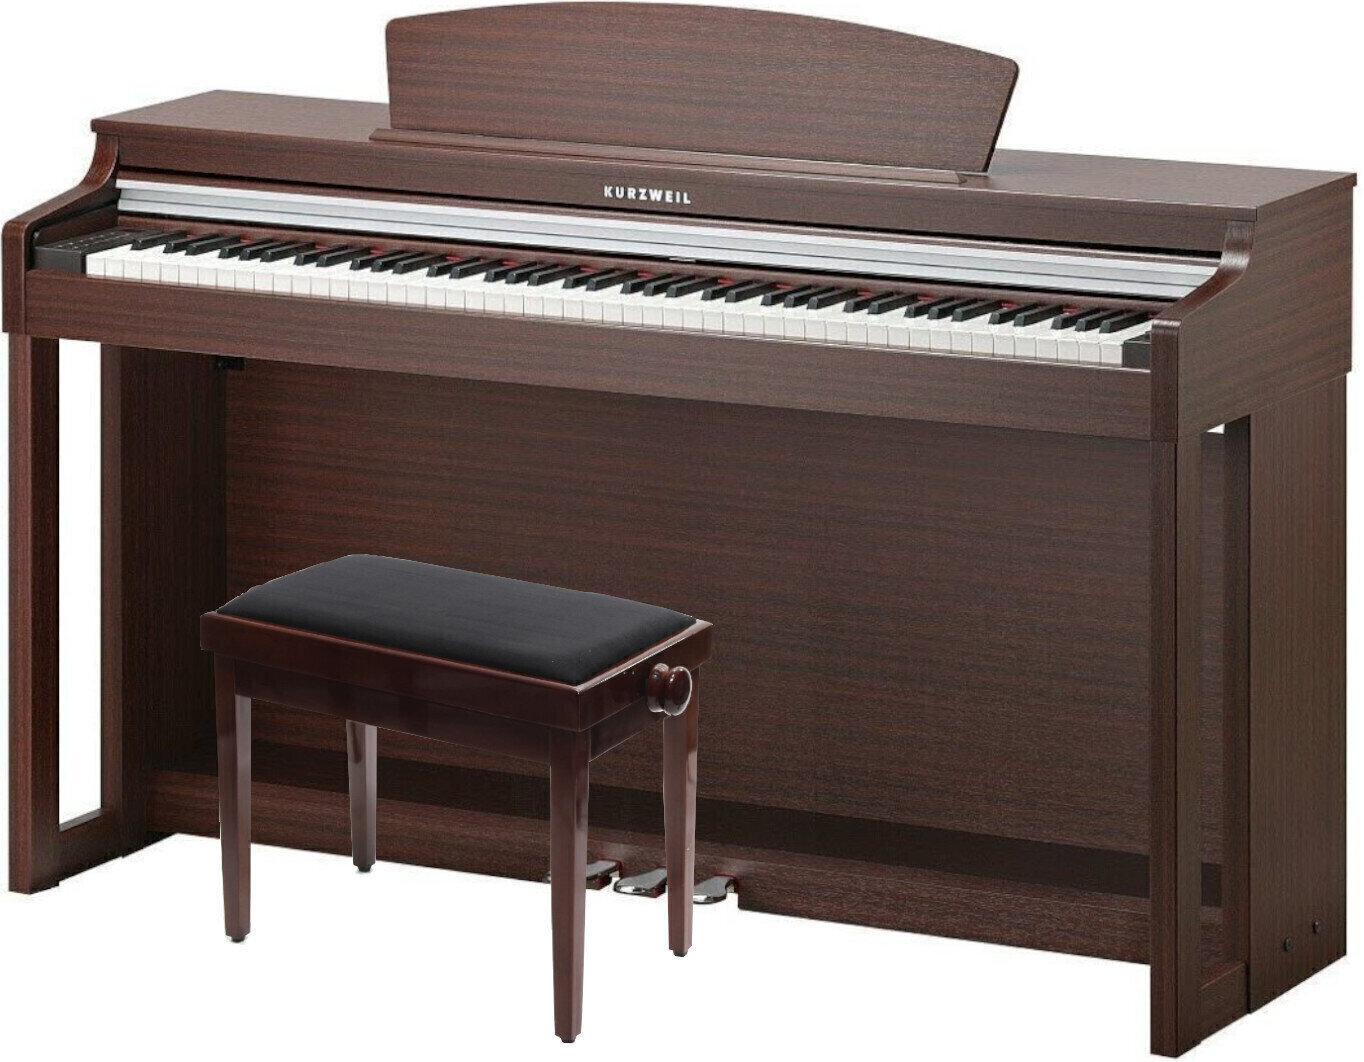 Digital Piano Kurzweil MP120-SM